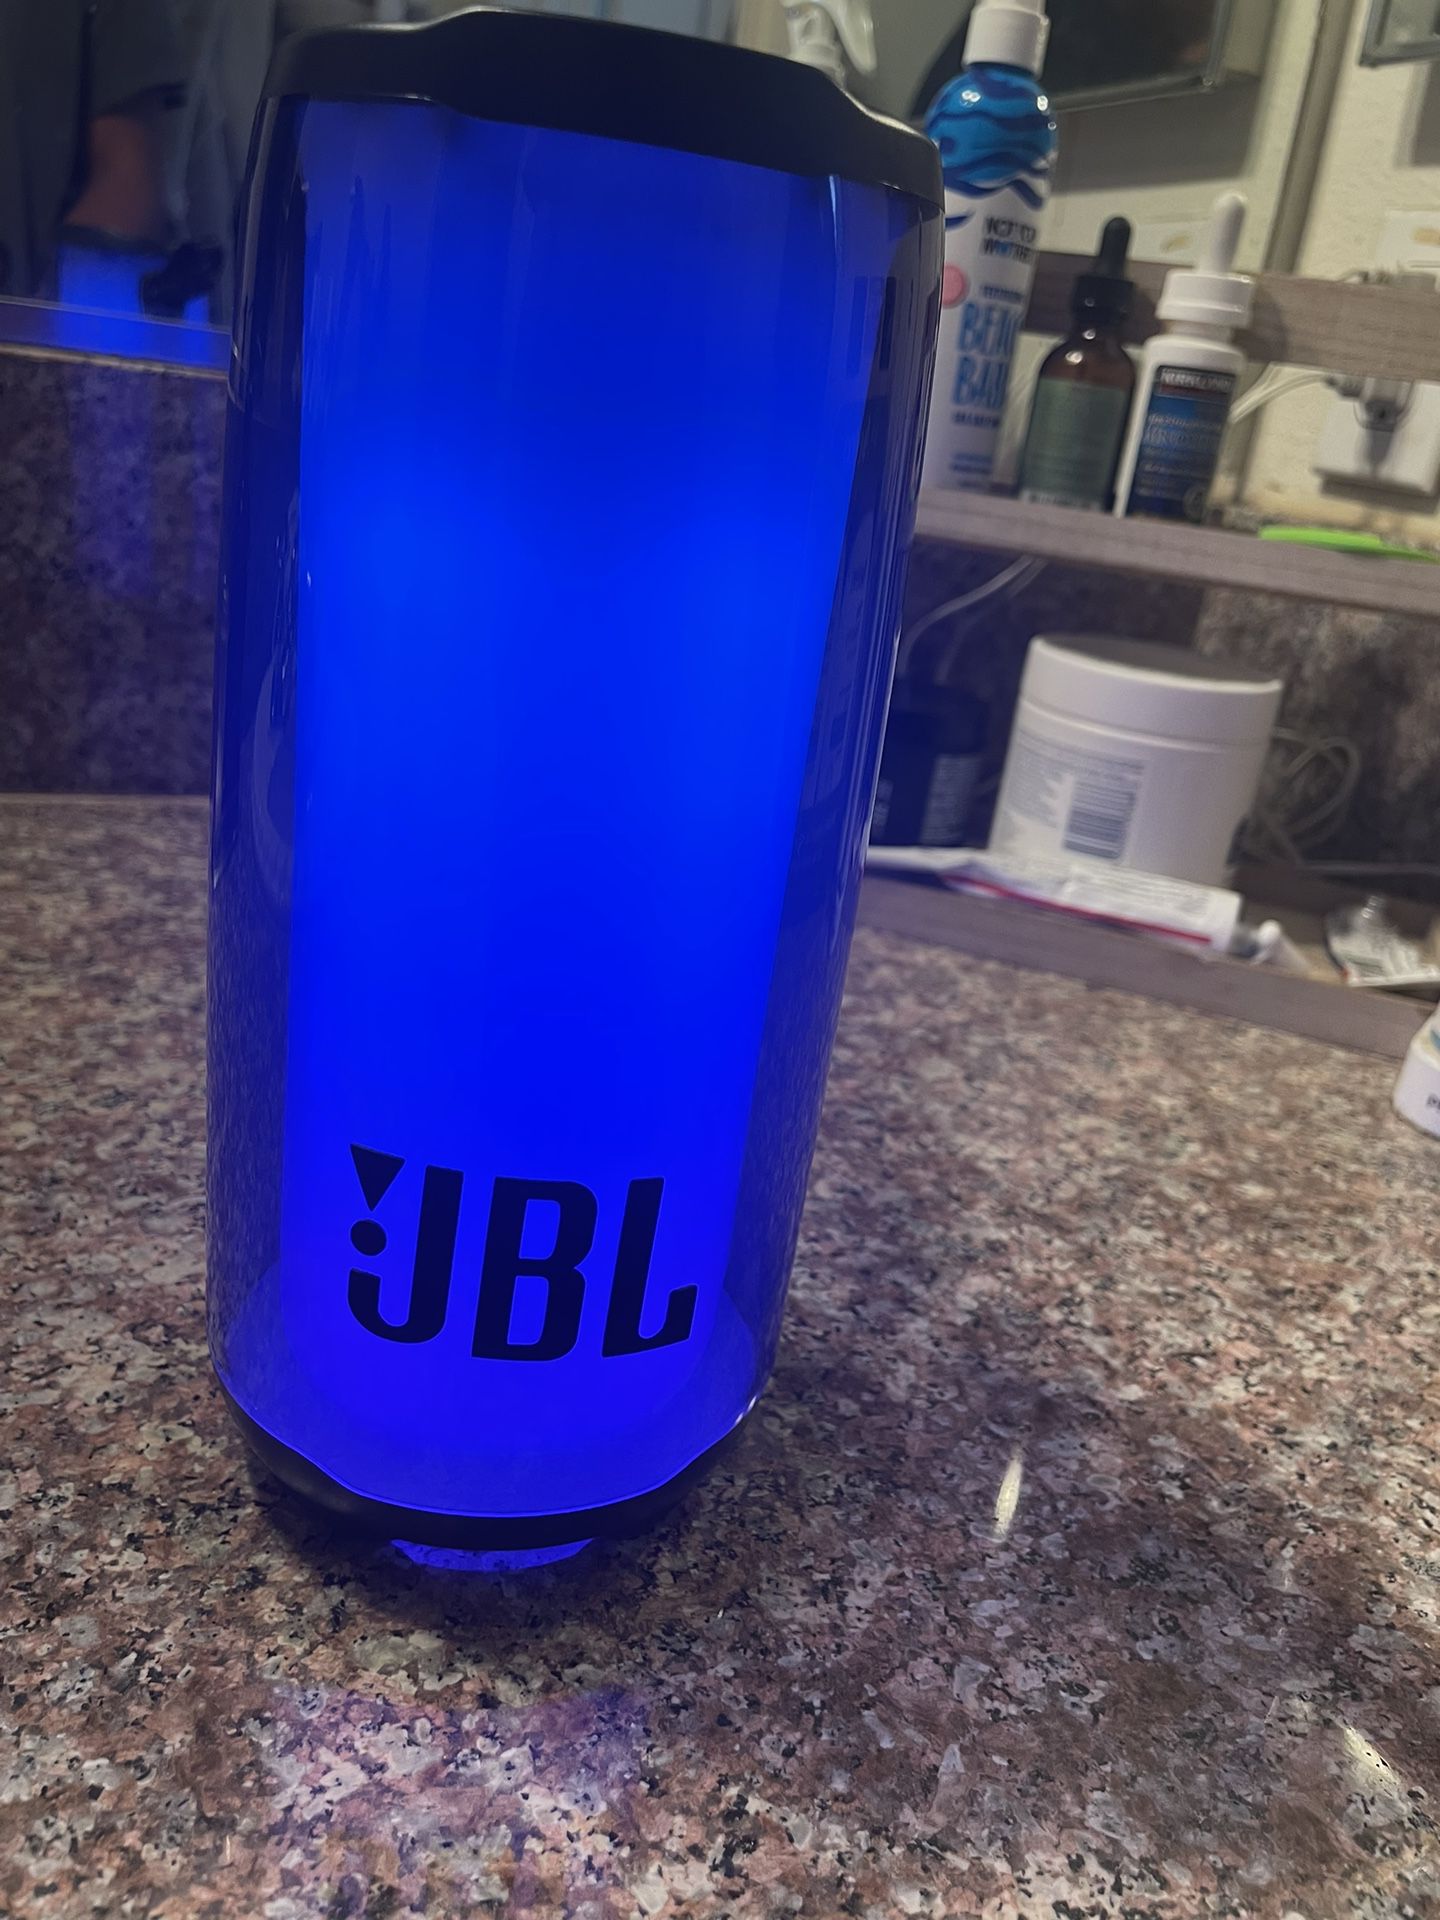 JBL Pulse 5 Bluetooh RGB Waterproof Speaker